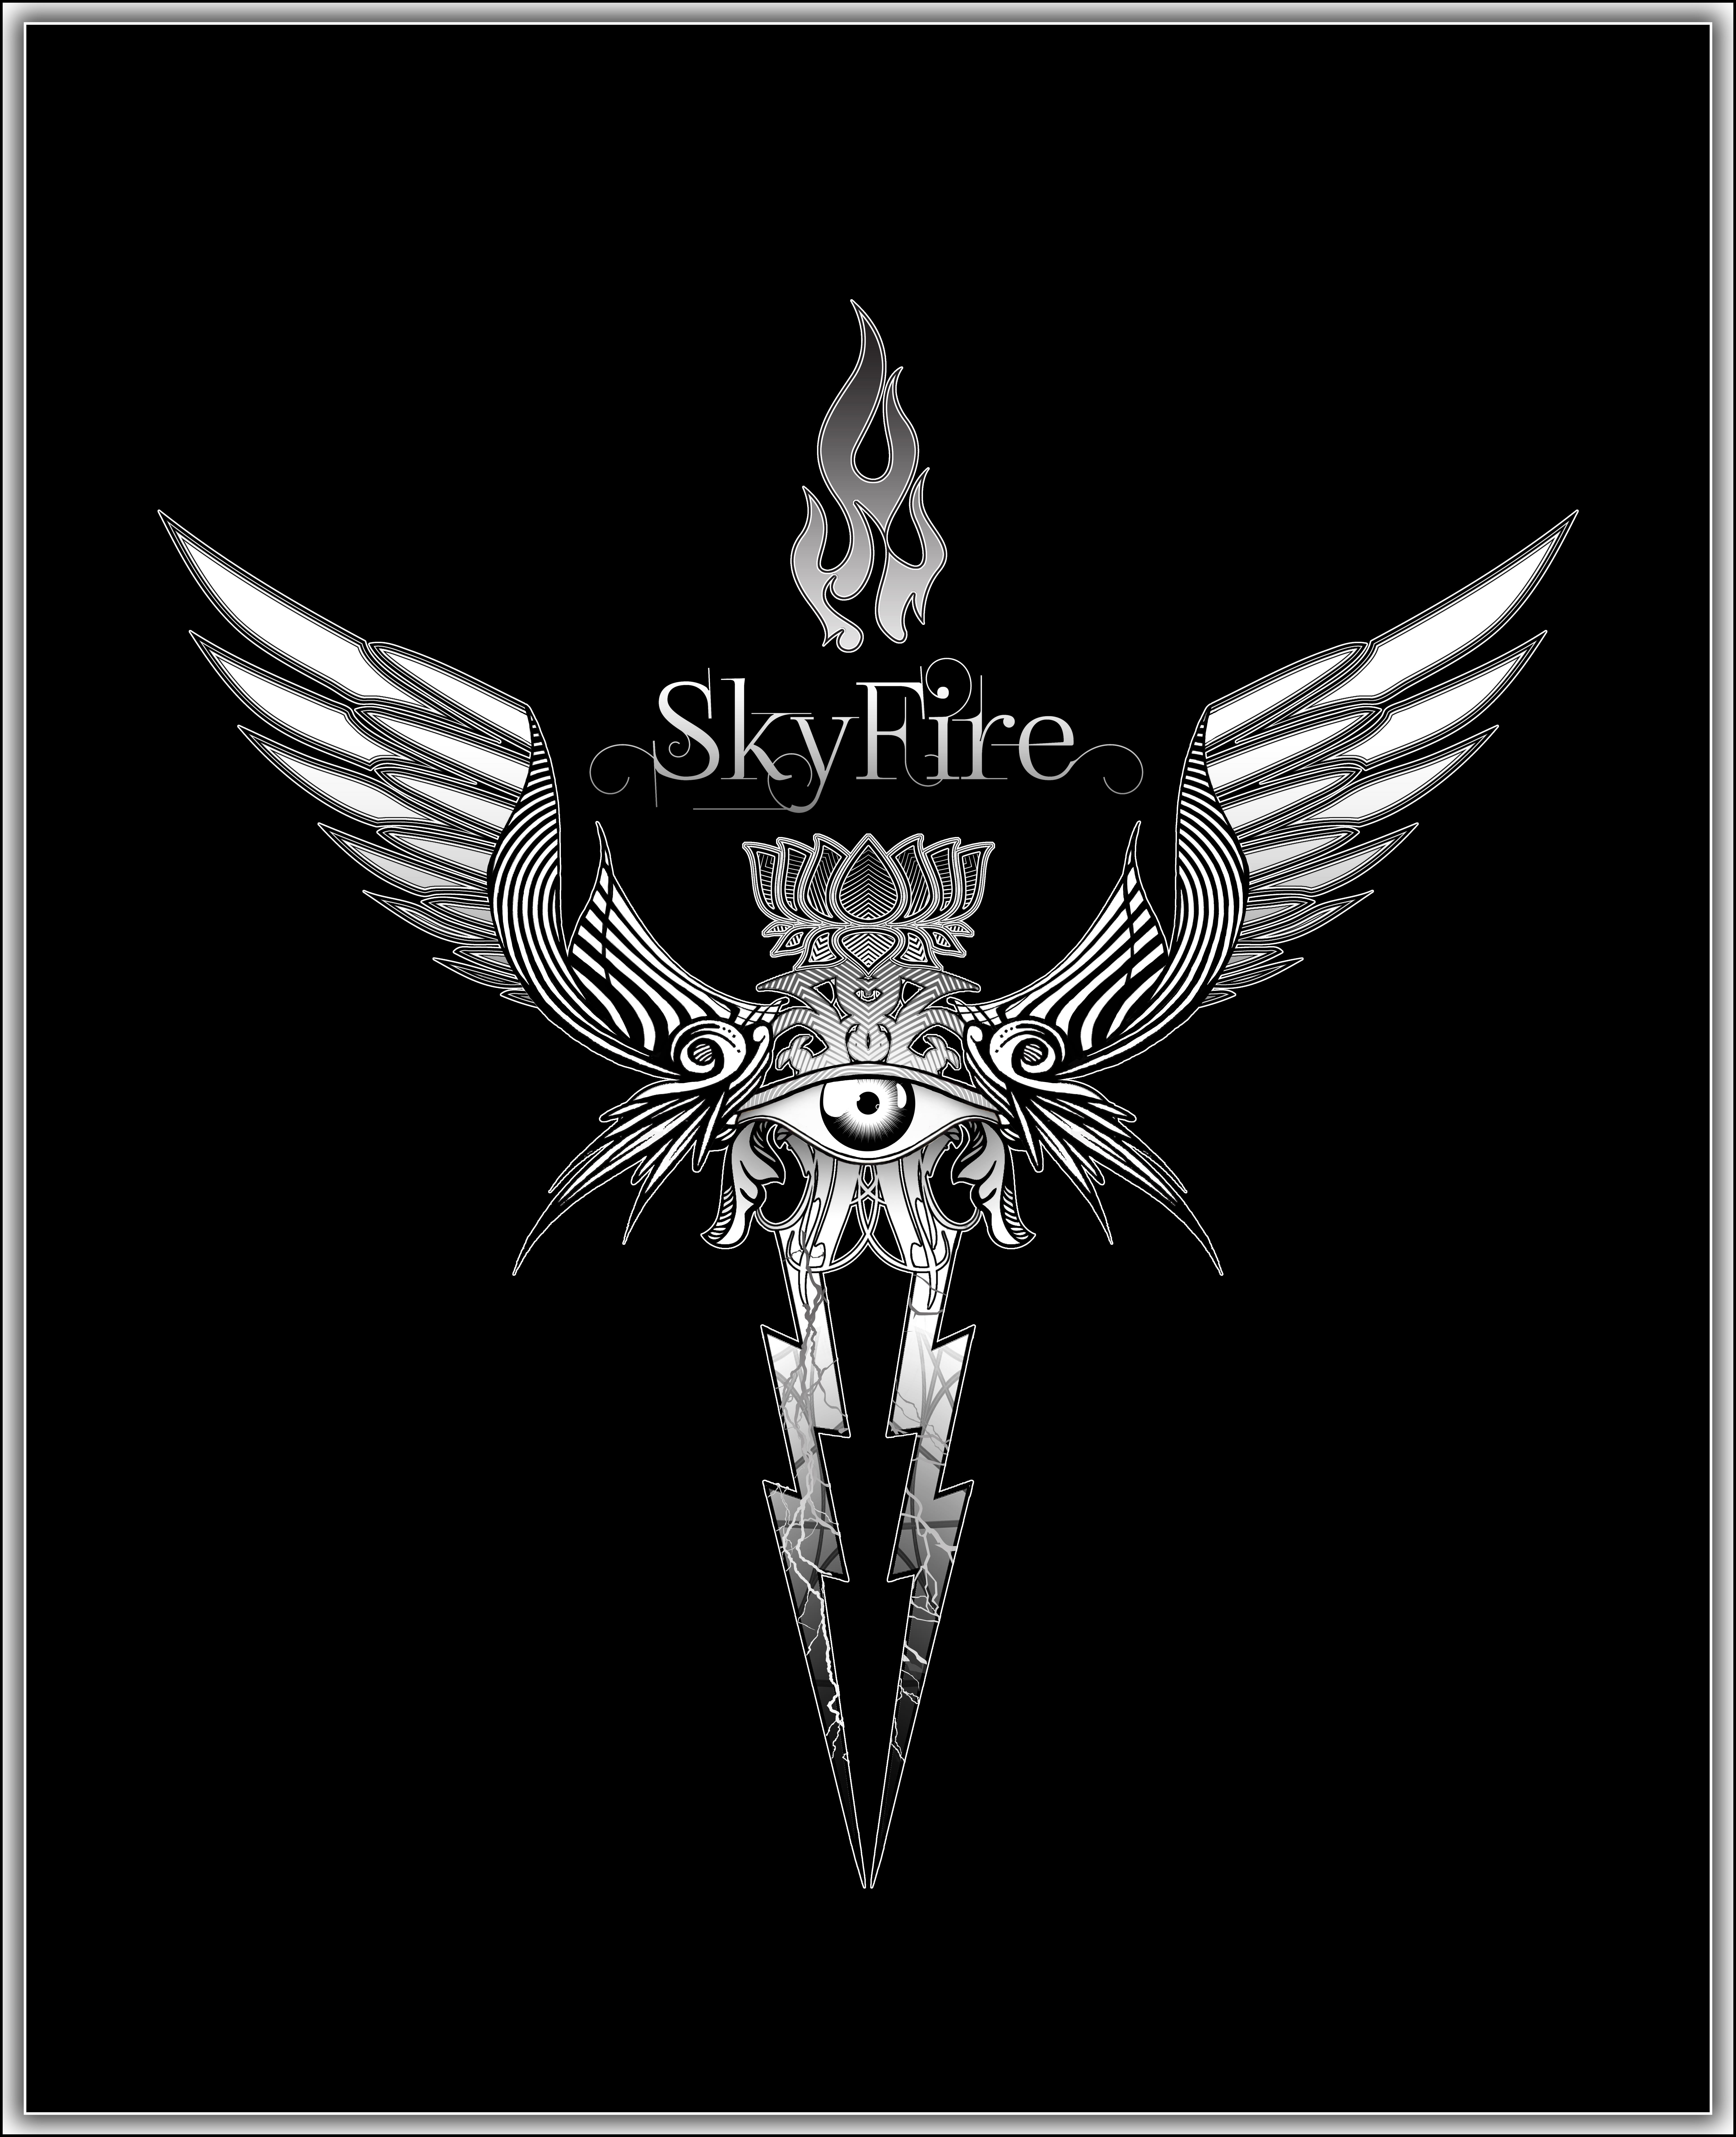 SkyFire Arts